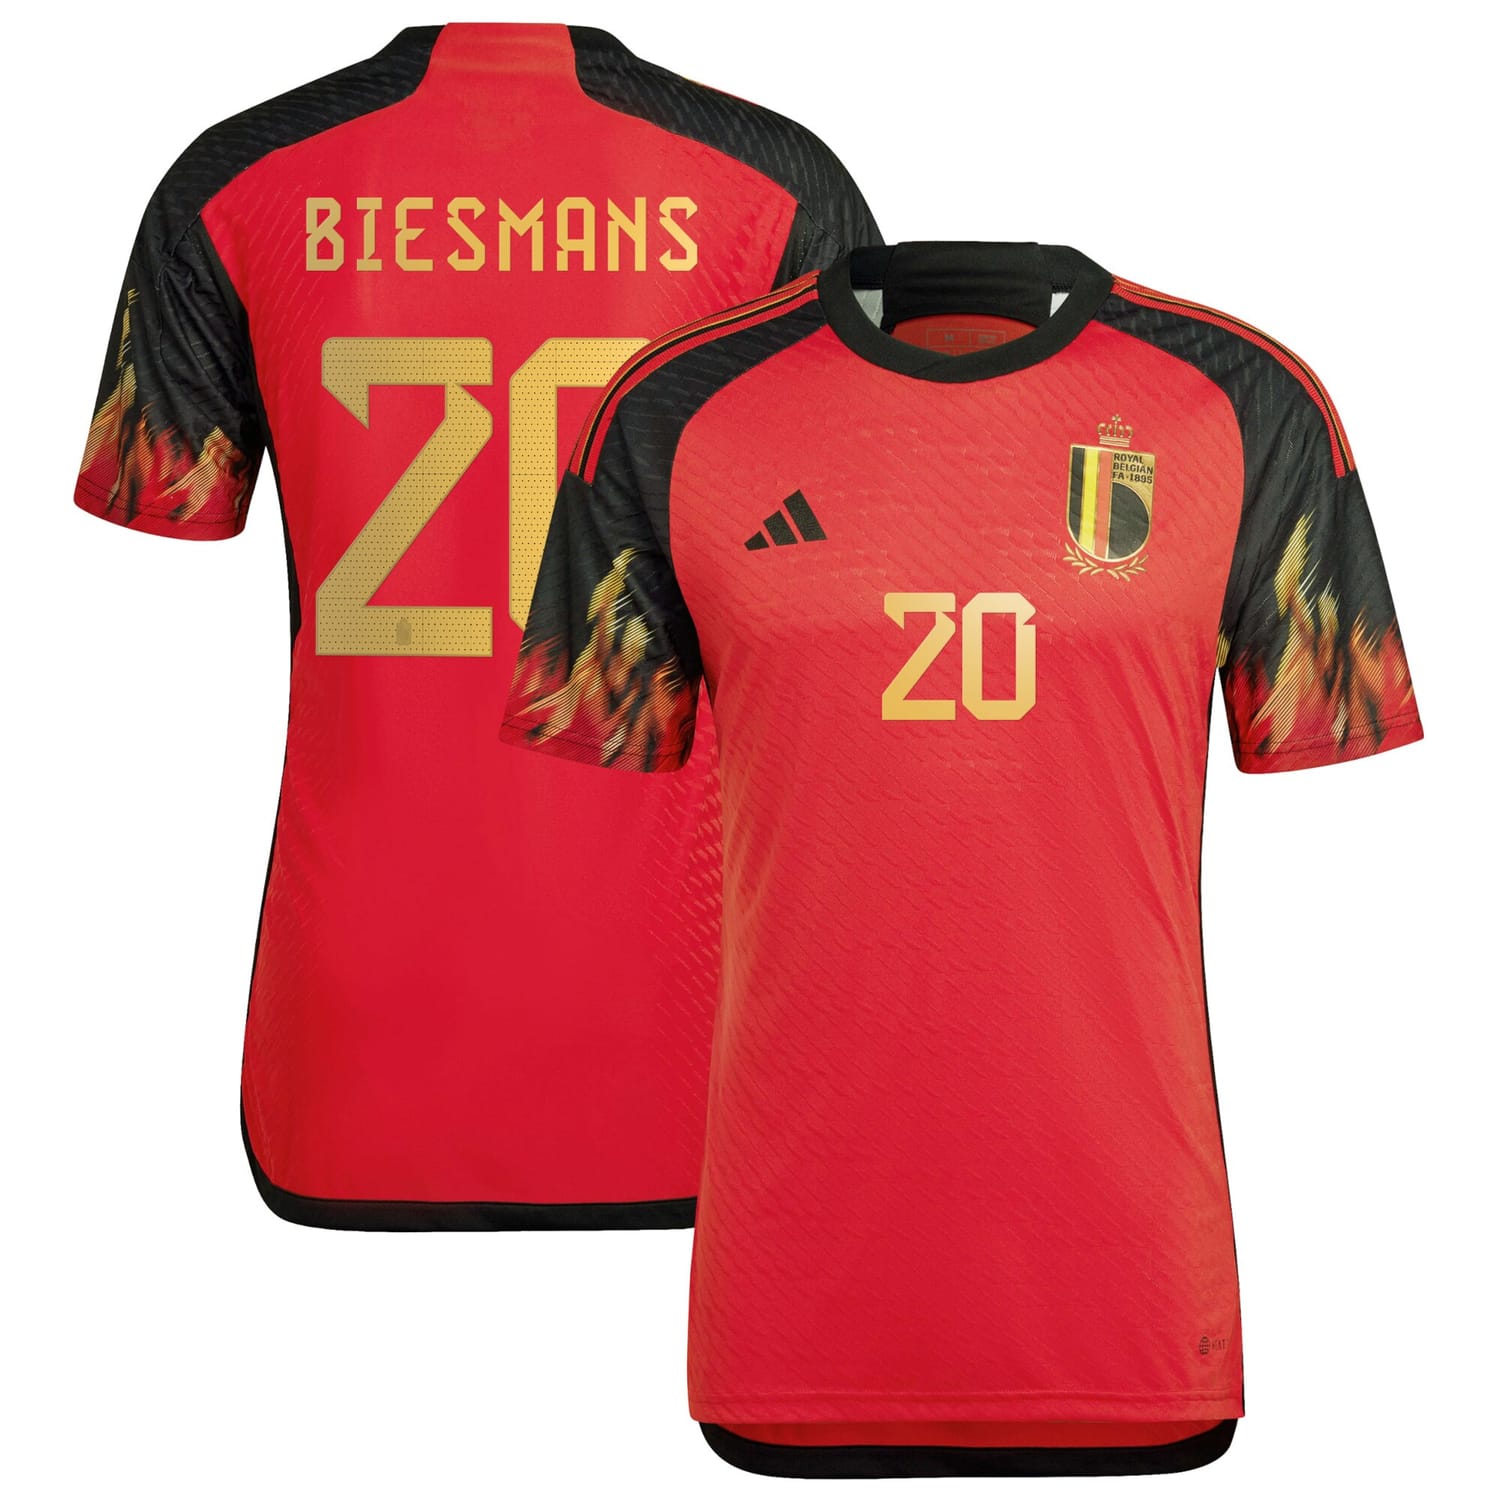 Belgium National Team Home Authentic Jersey Shirt 2022 player Julie Biesmans 20 printing for Men